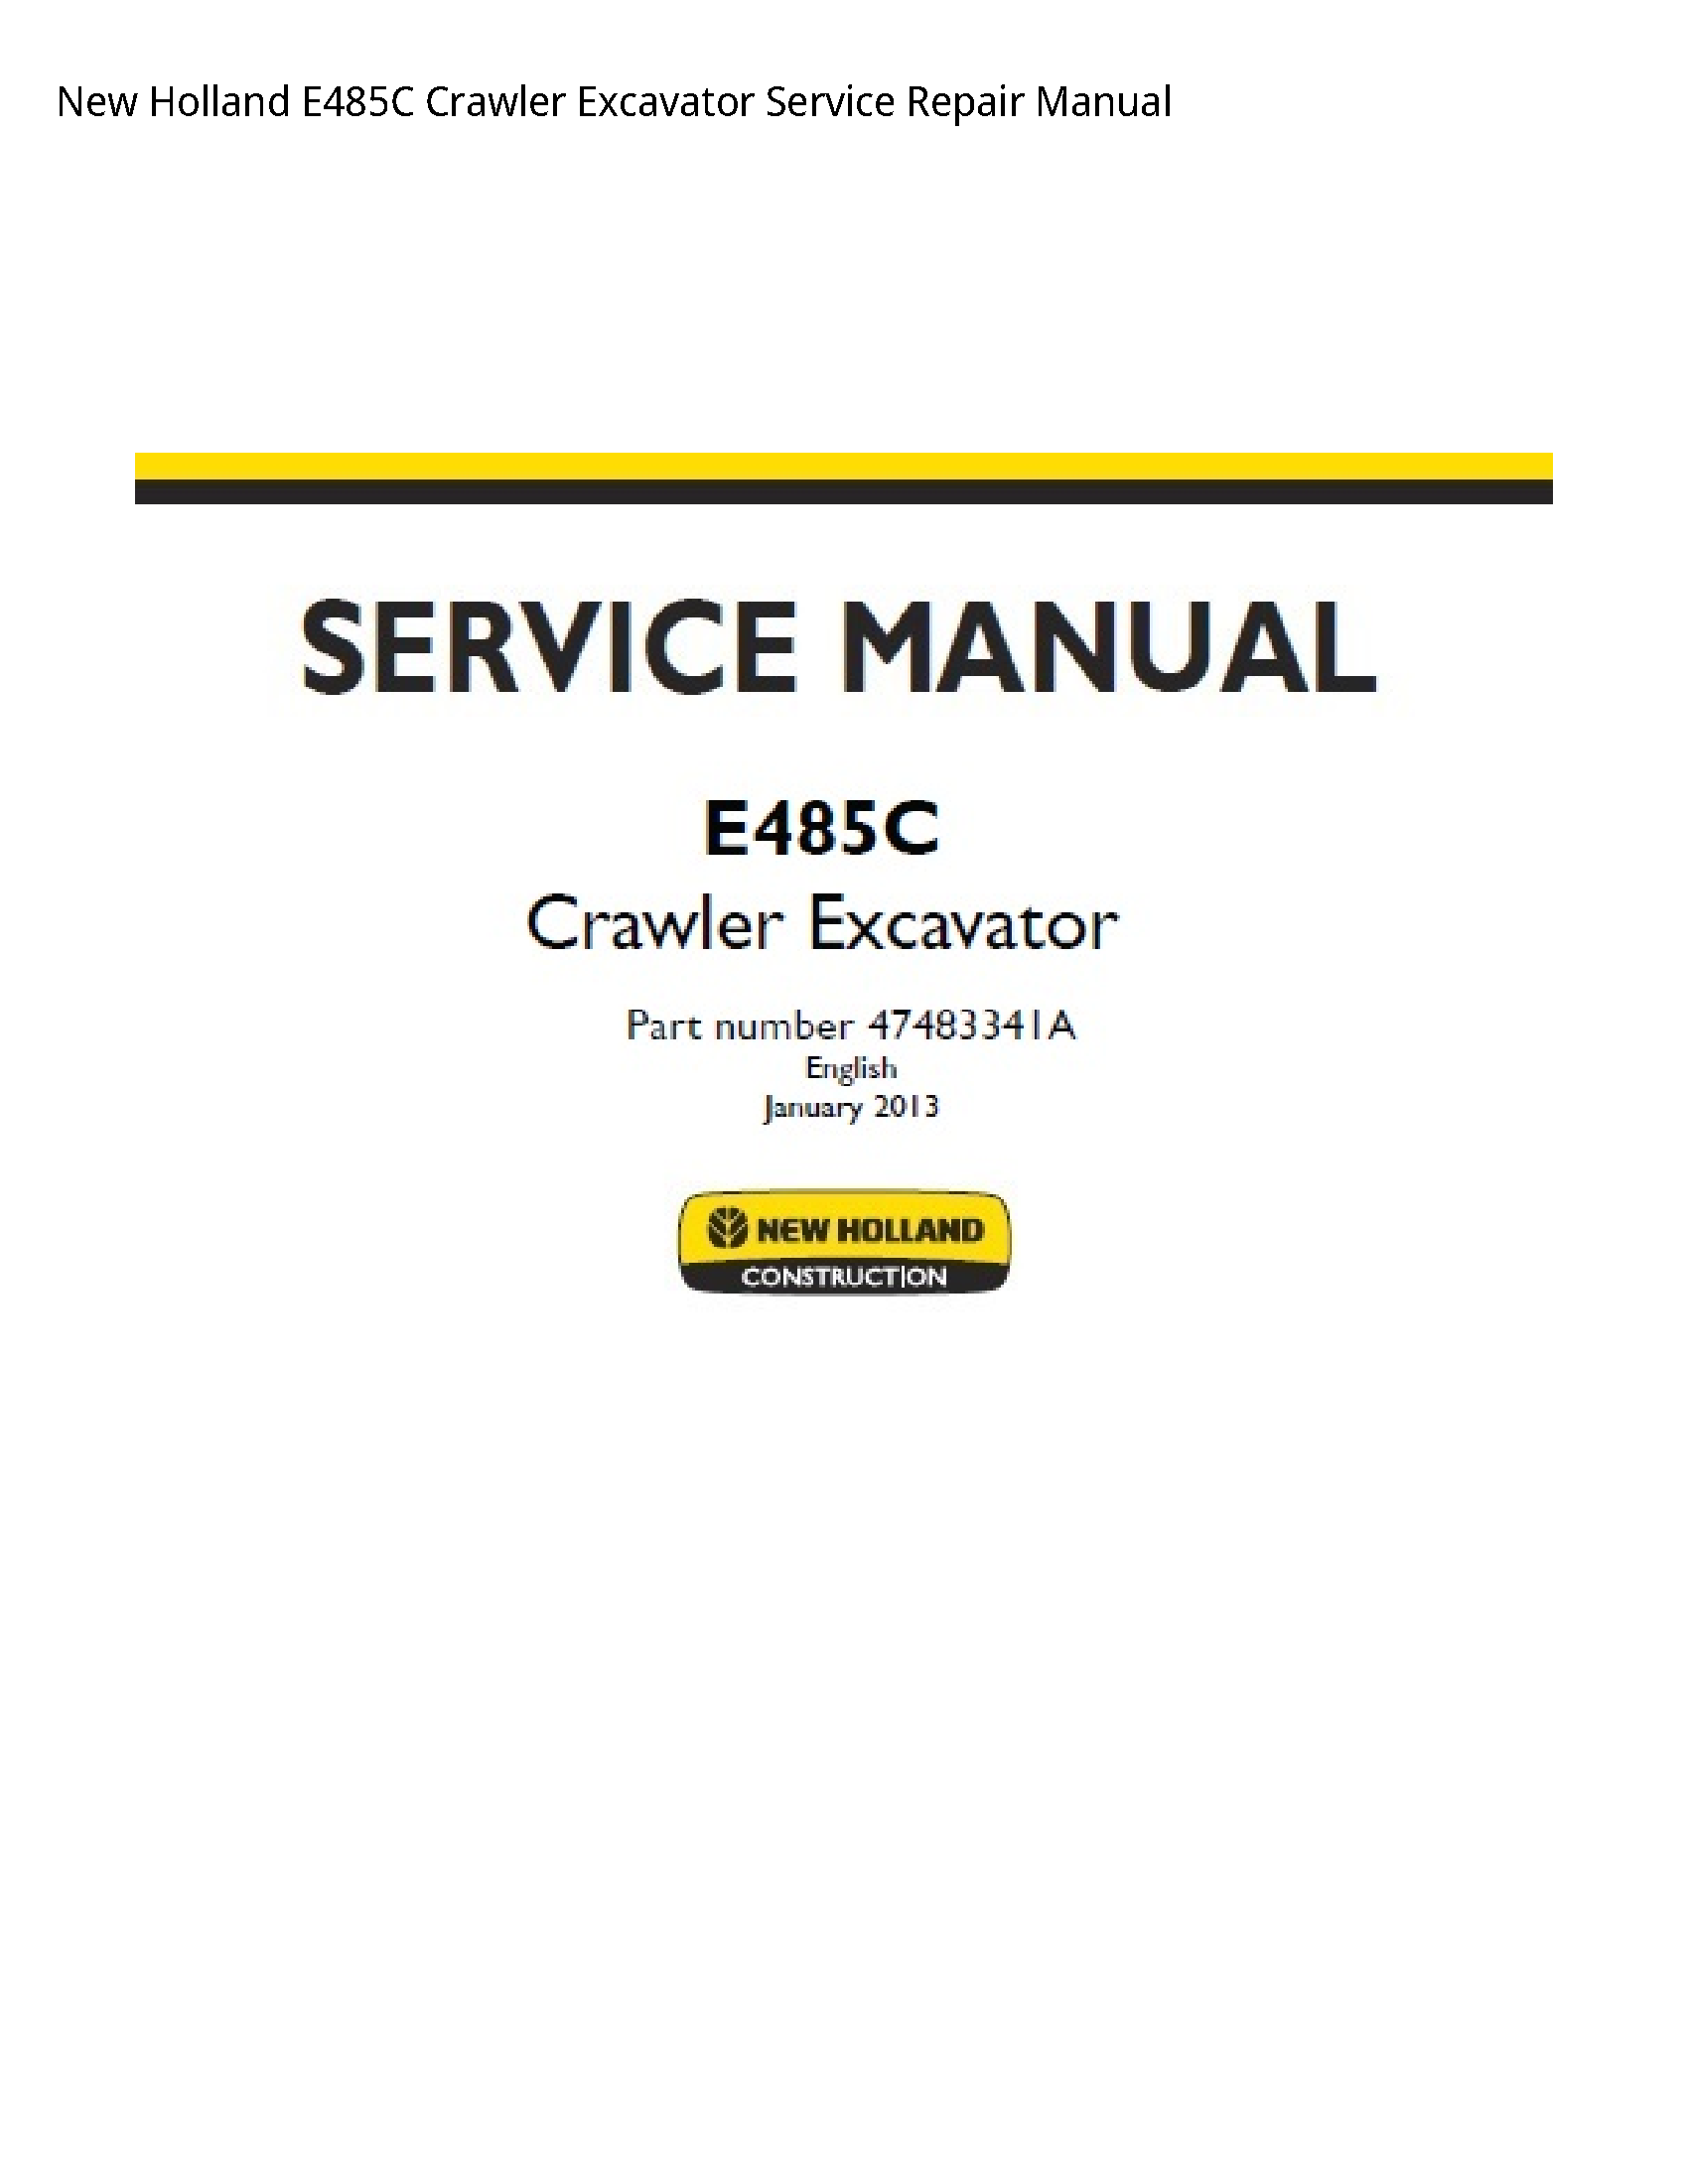 New Holland E485C Crawler Excavator manual